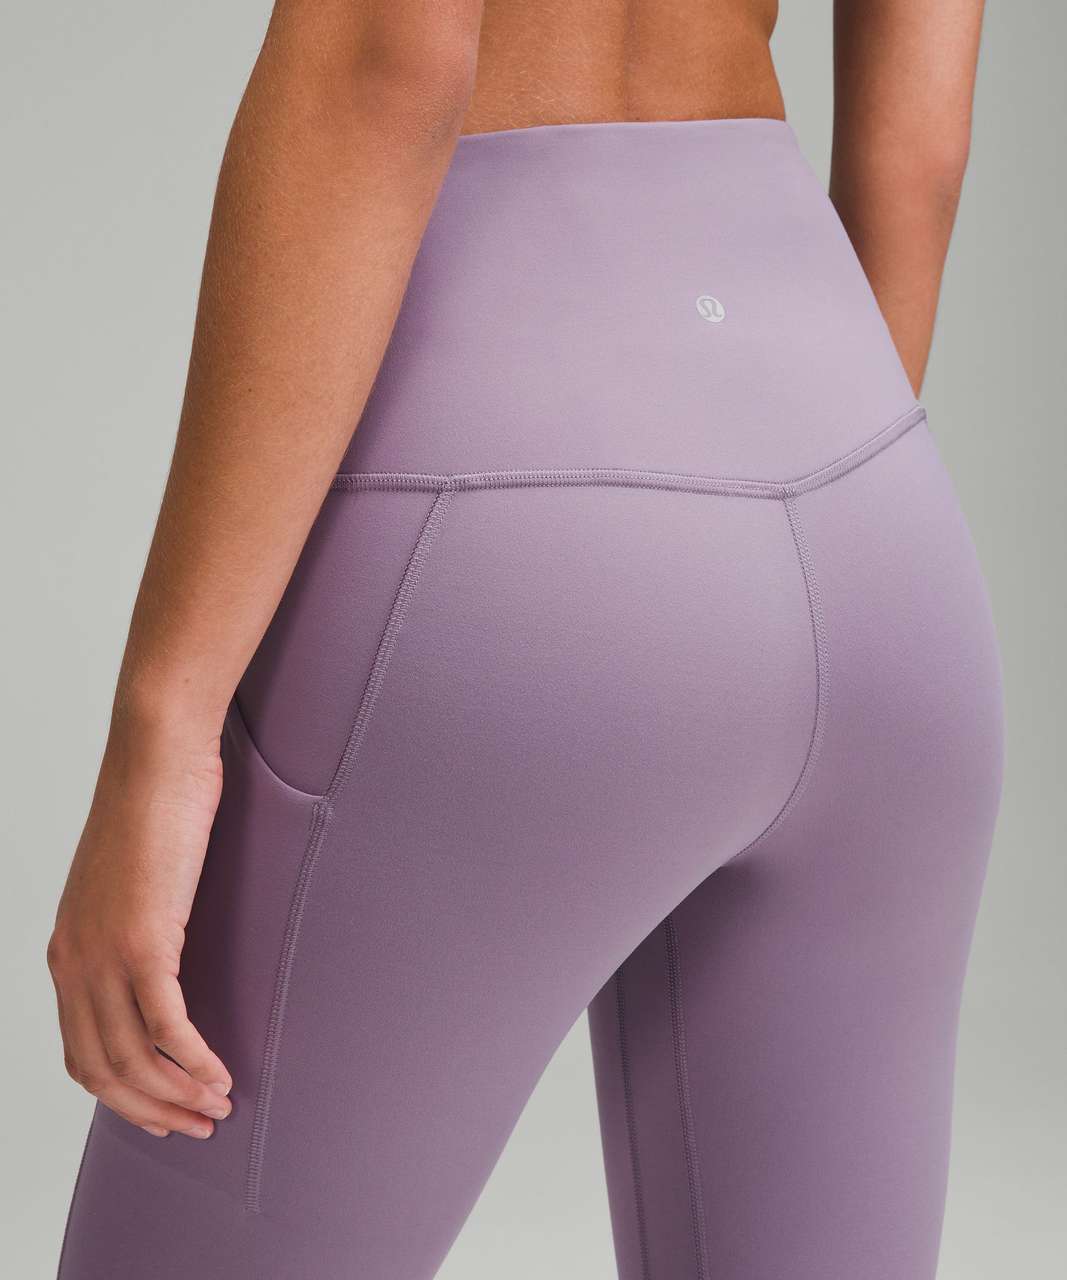 NWT Lululemon Align Pant Size 6 GRHP Graphite Purple 25 Released 2019  RARE!